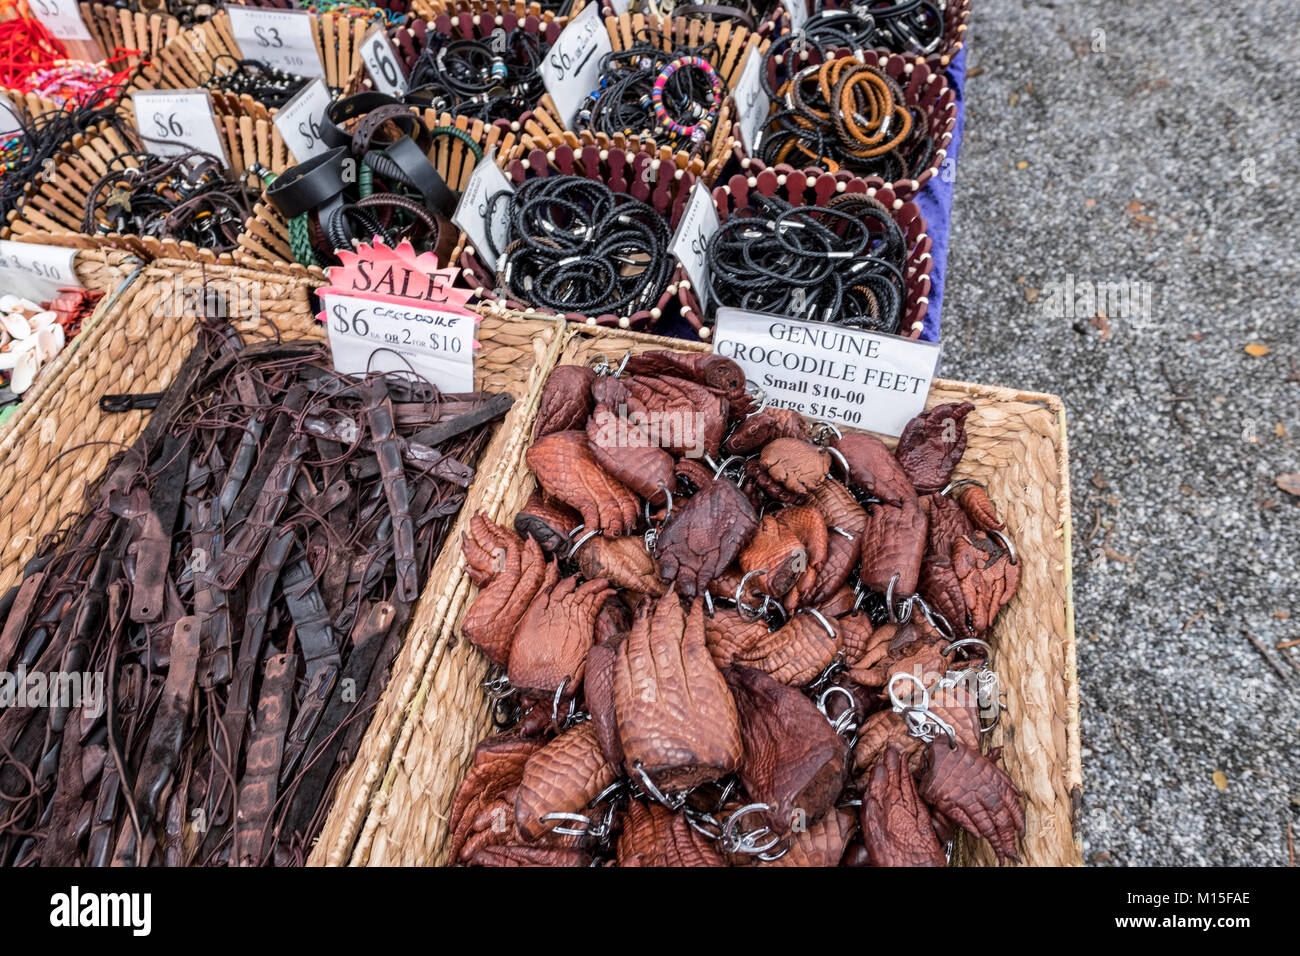 Crocodile feet and leather bracelets on sale at Port Douglas sunday markets,Far north Queensland,Australia Stock Photo